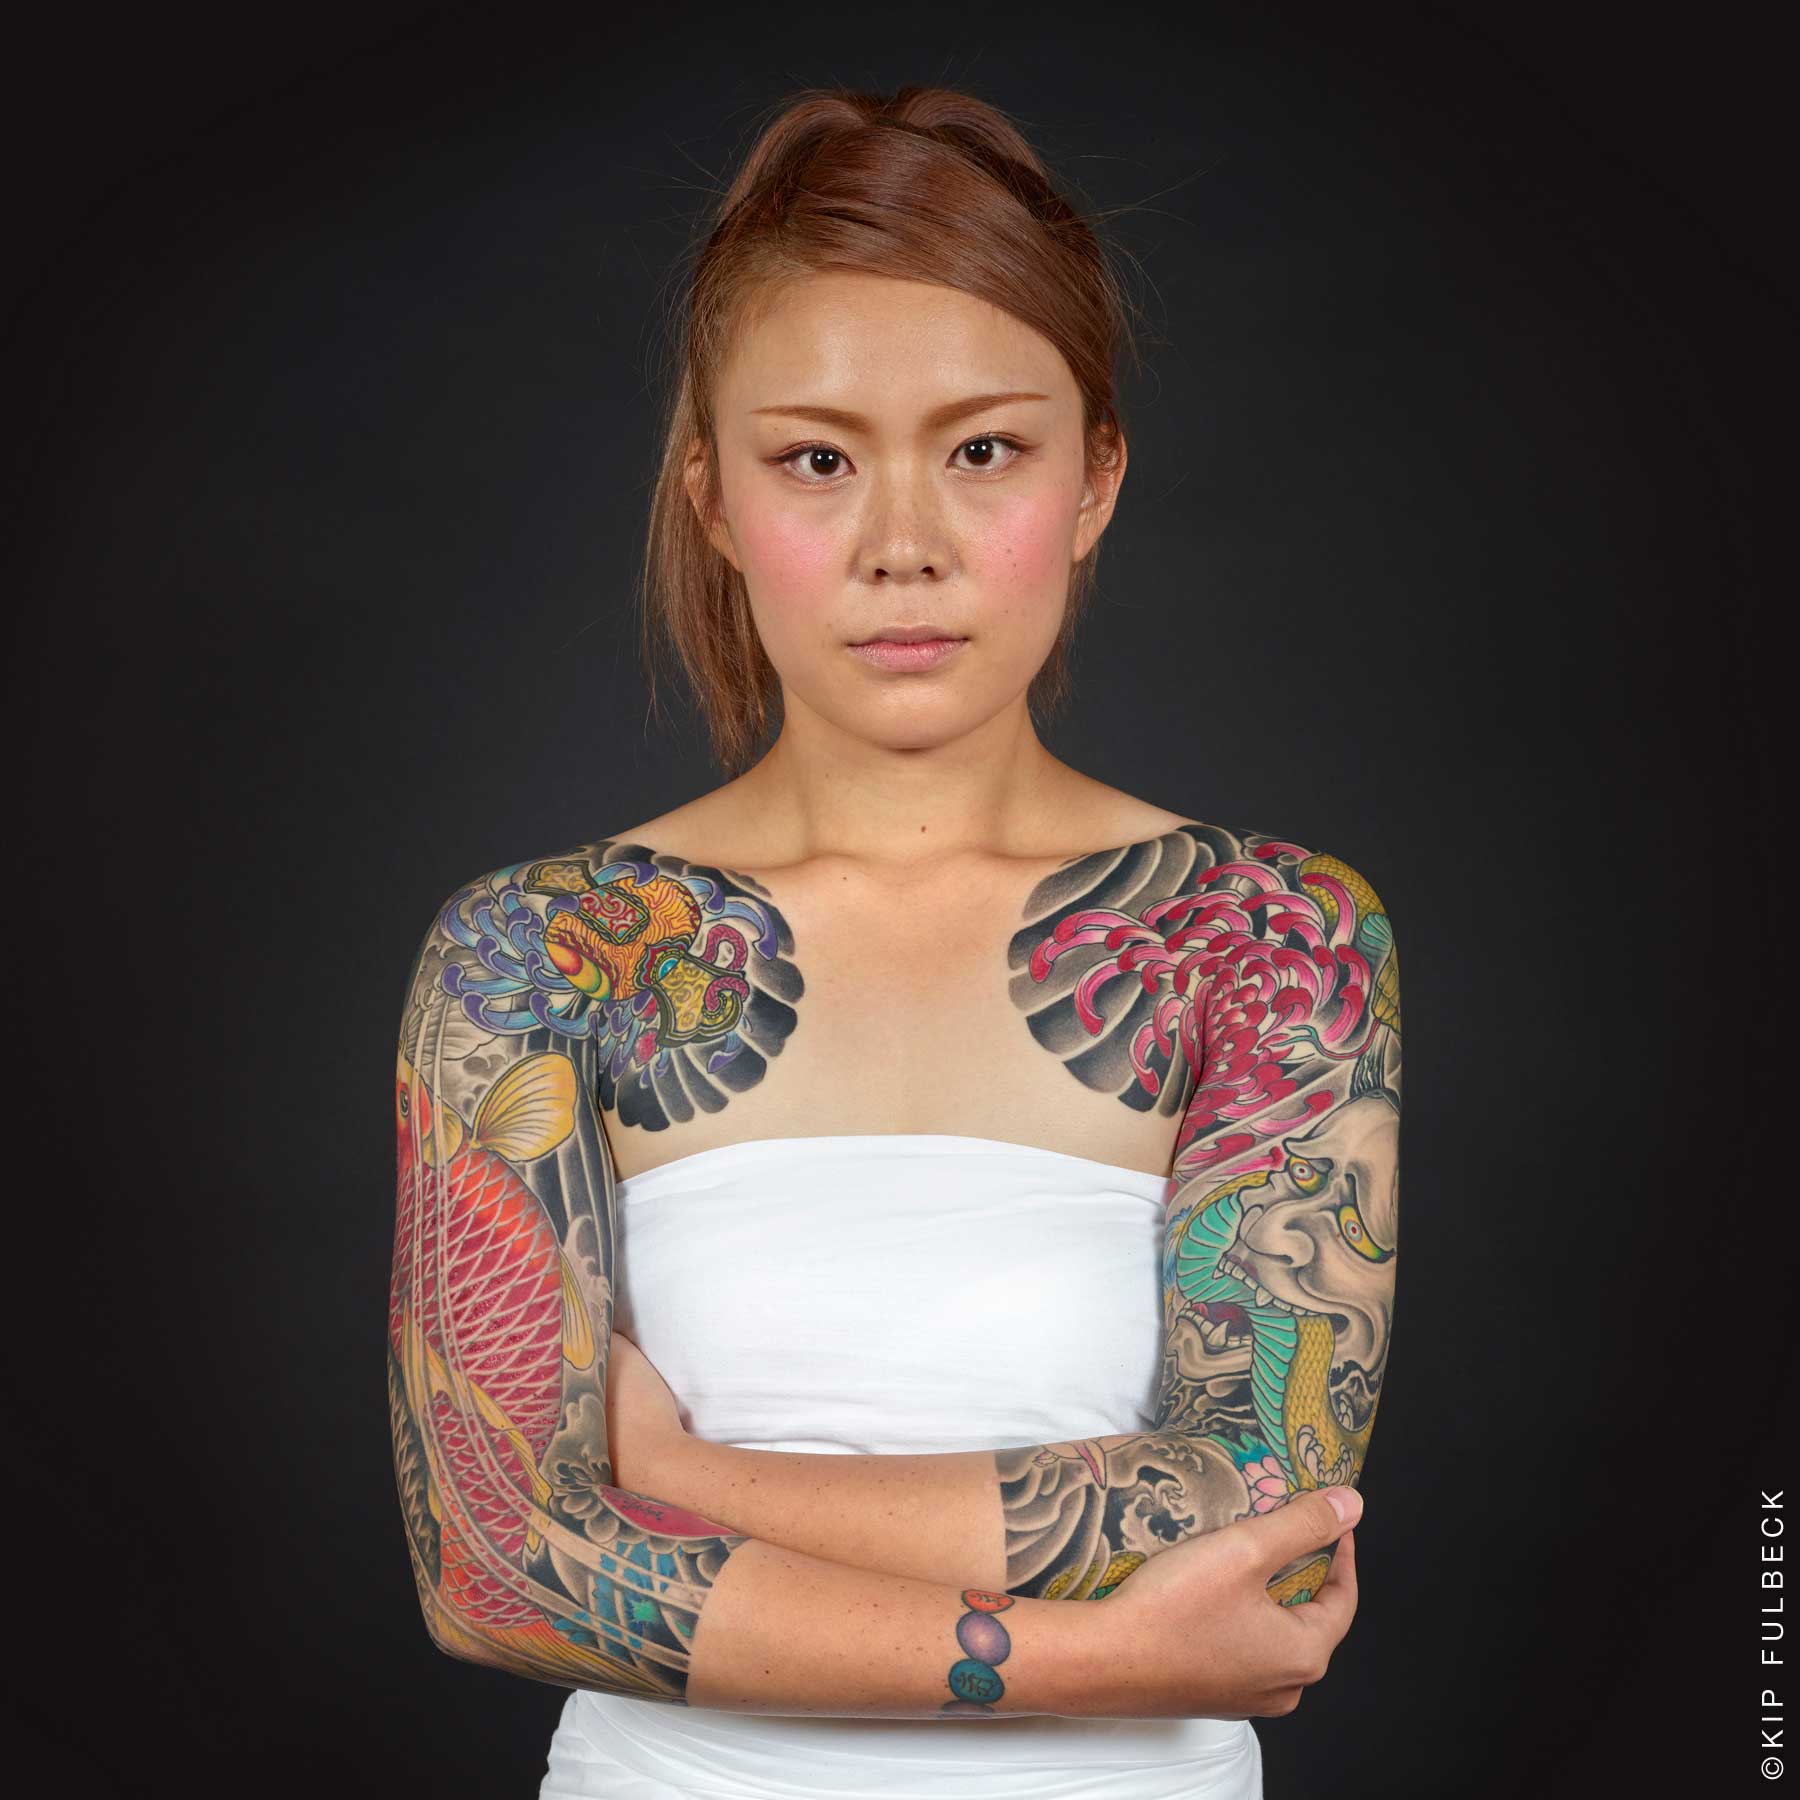 Tattoo by Horikiku; photo by Kip Fulbeck